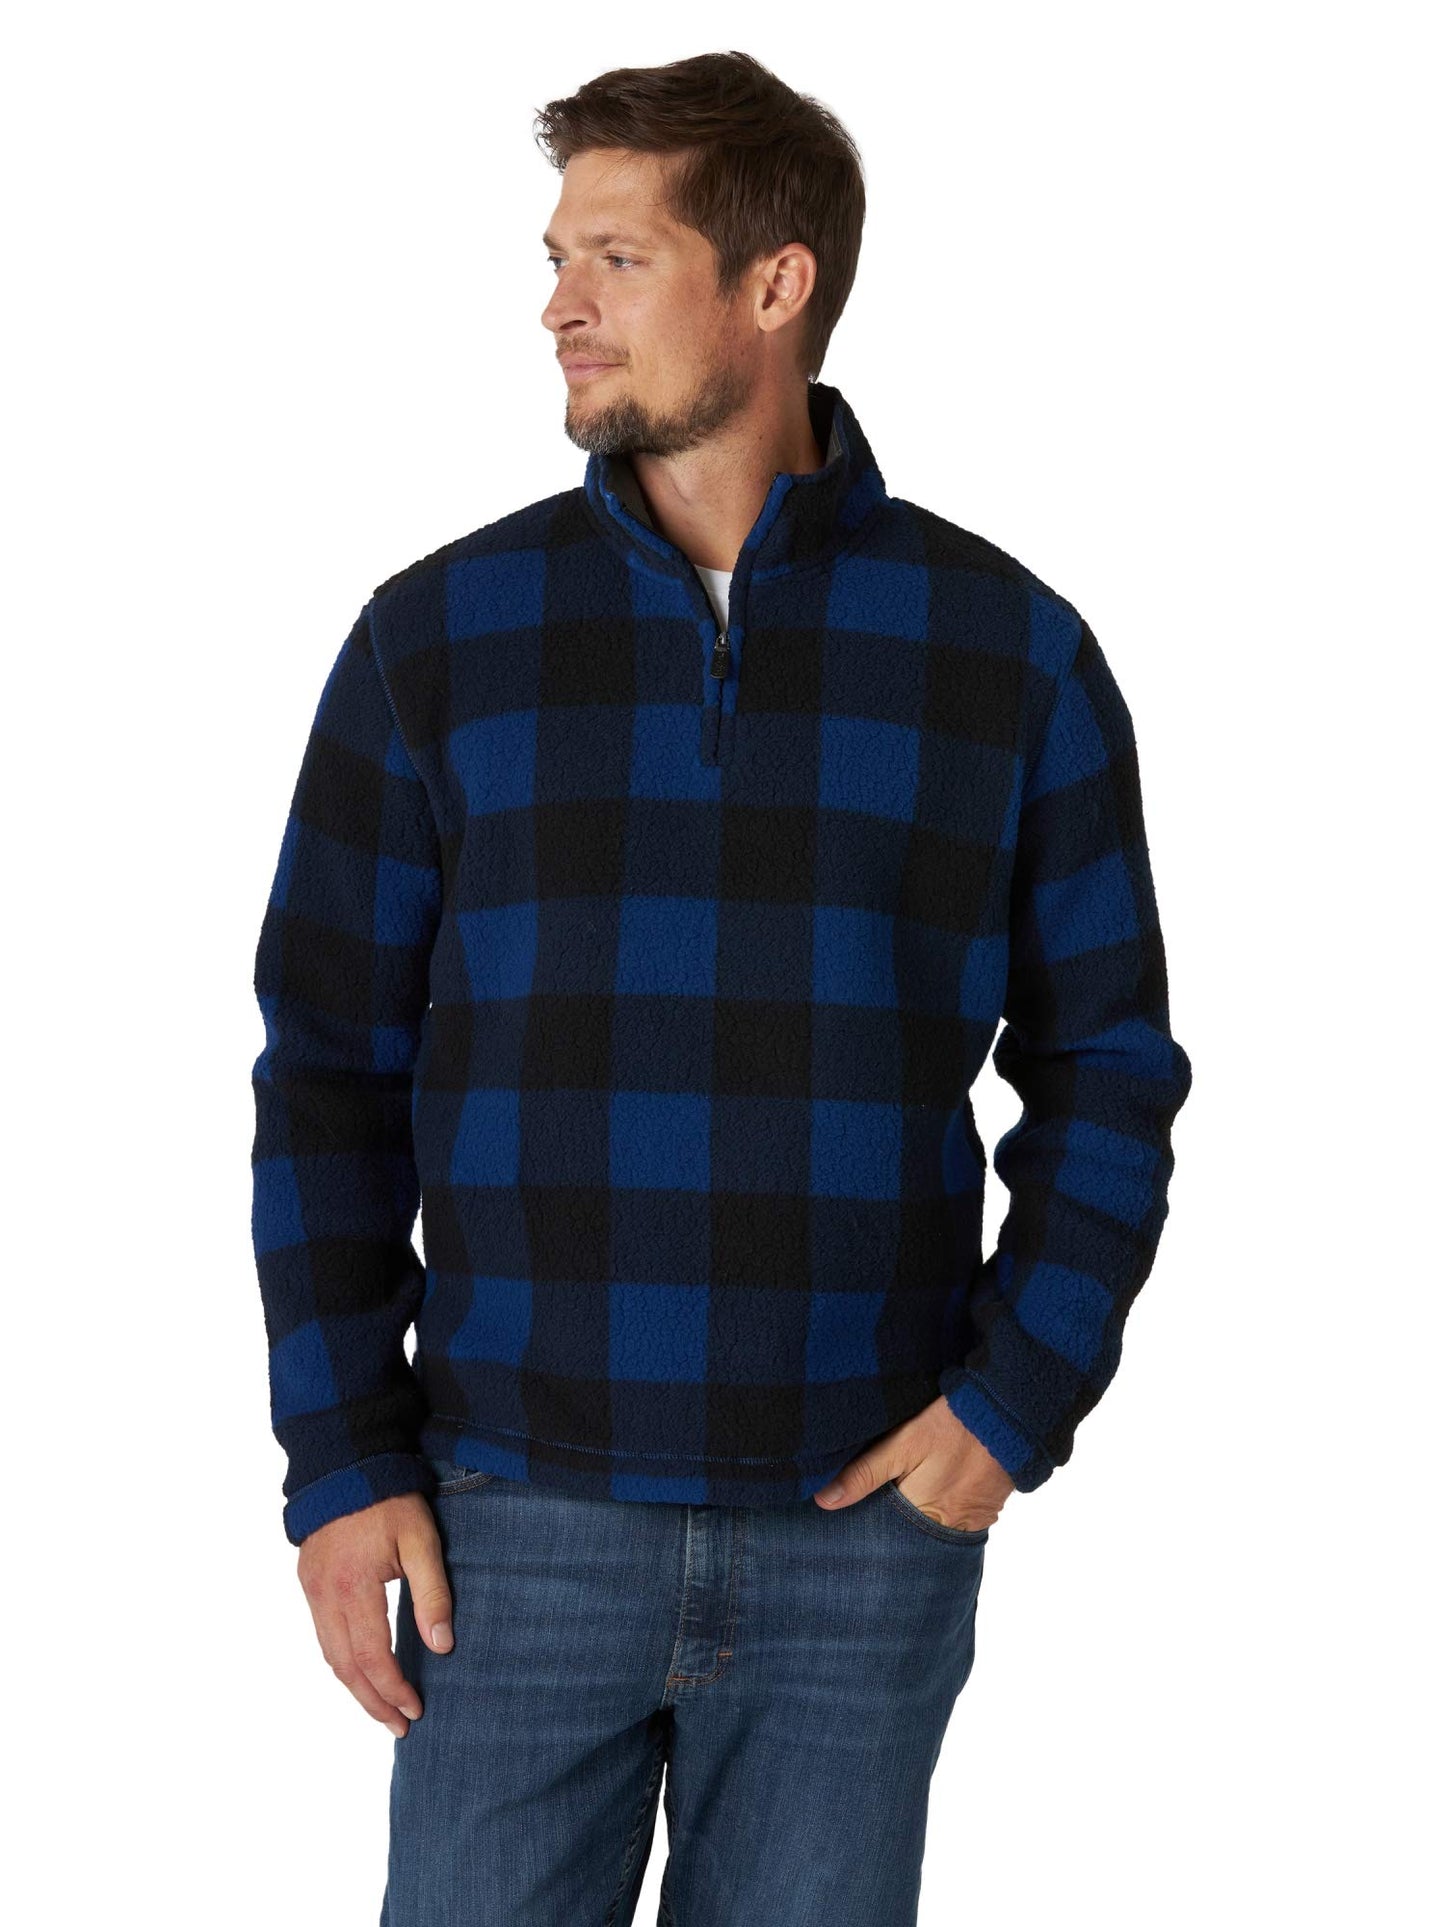 Wrangler Authentics Men's Wooly Fleece Quarter-Zip, Blue Buffalo, X-Large